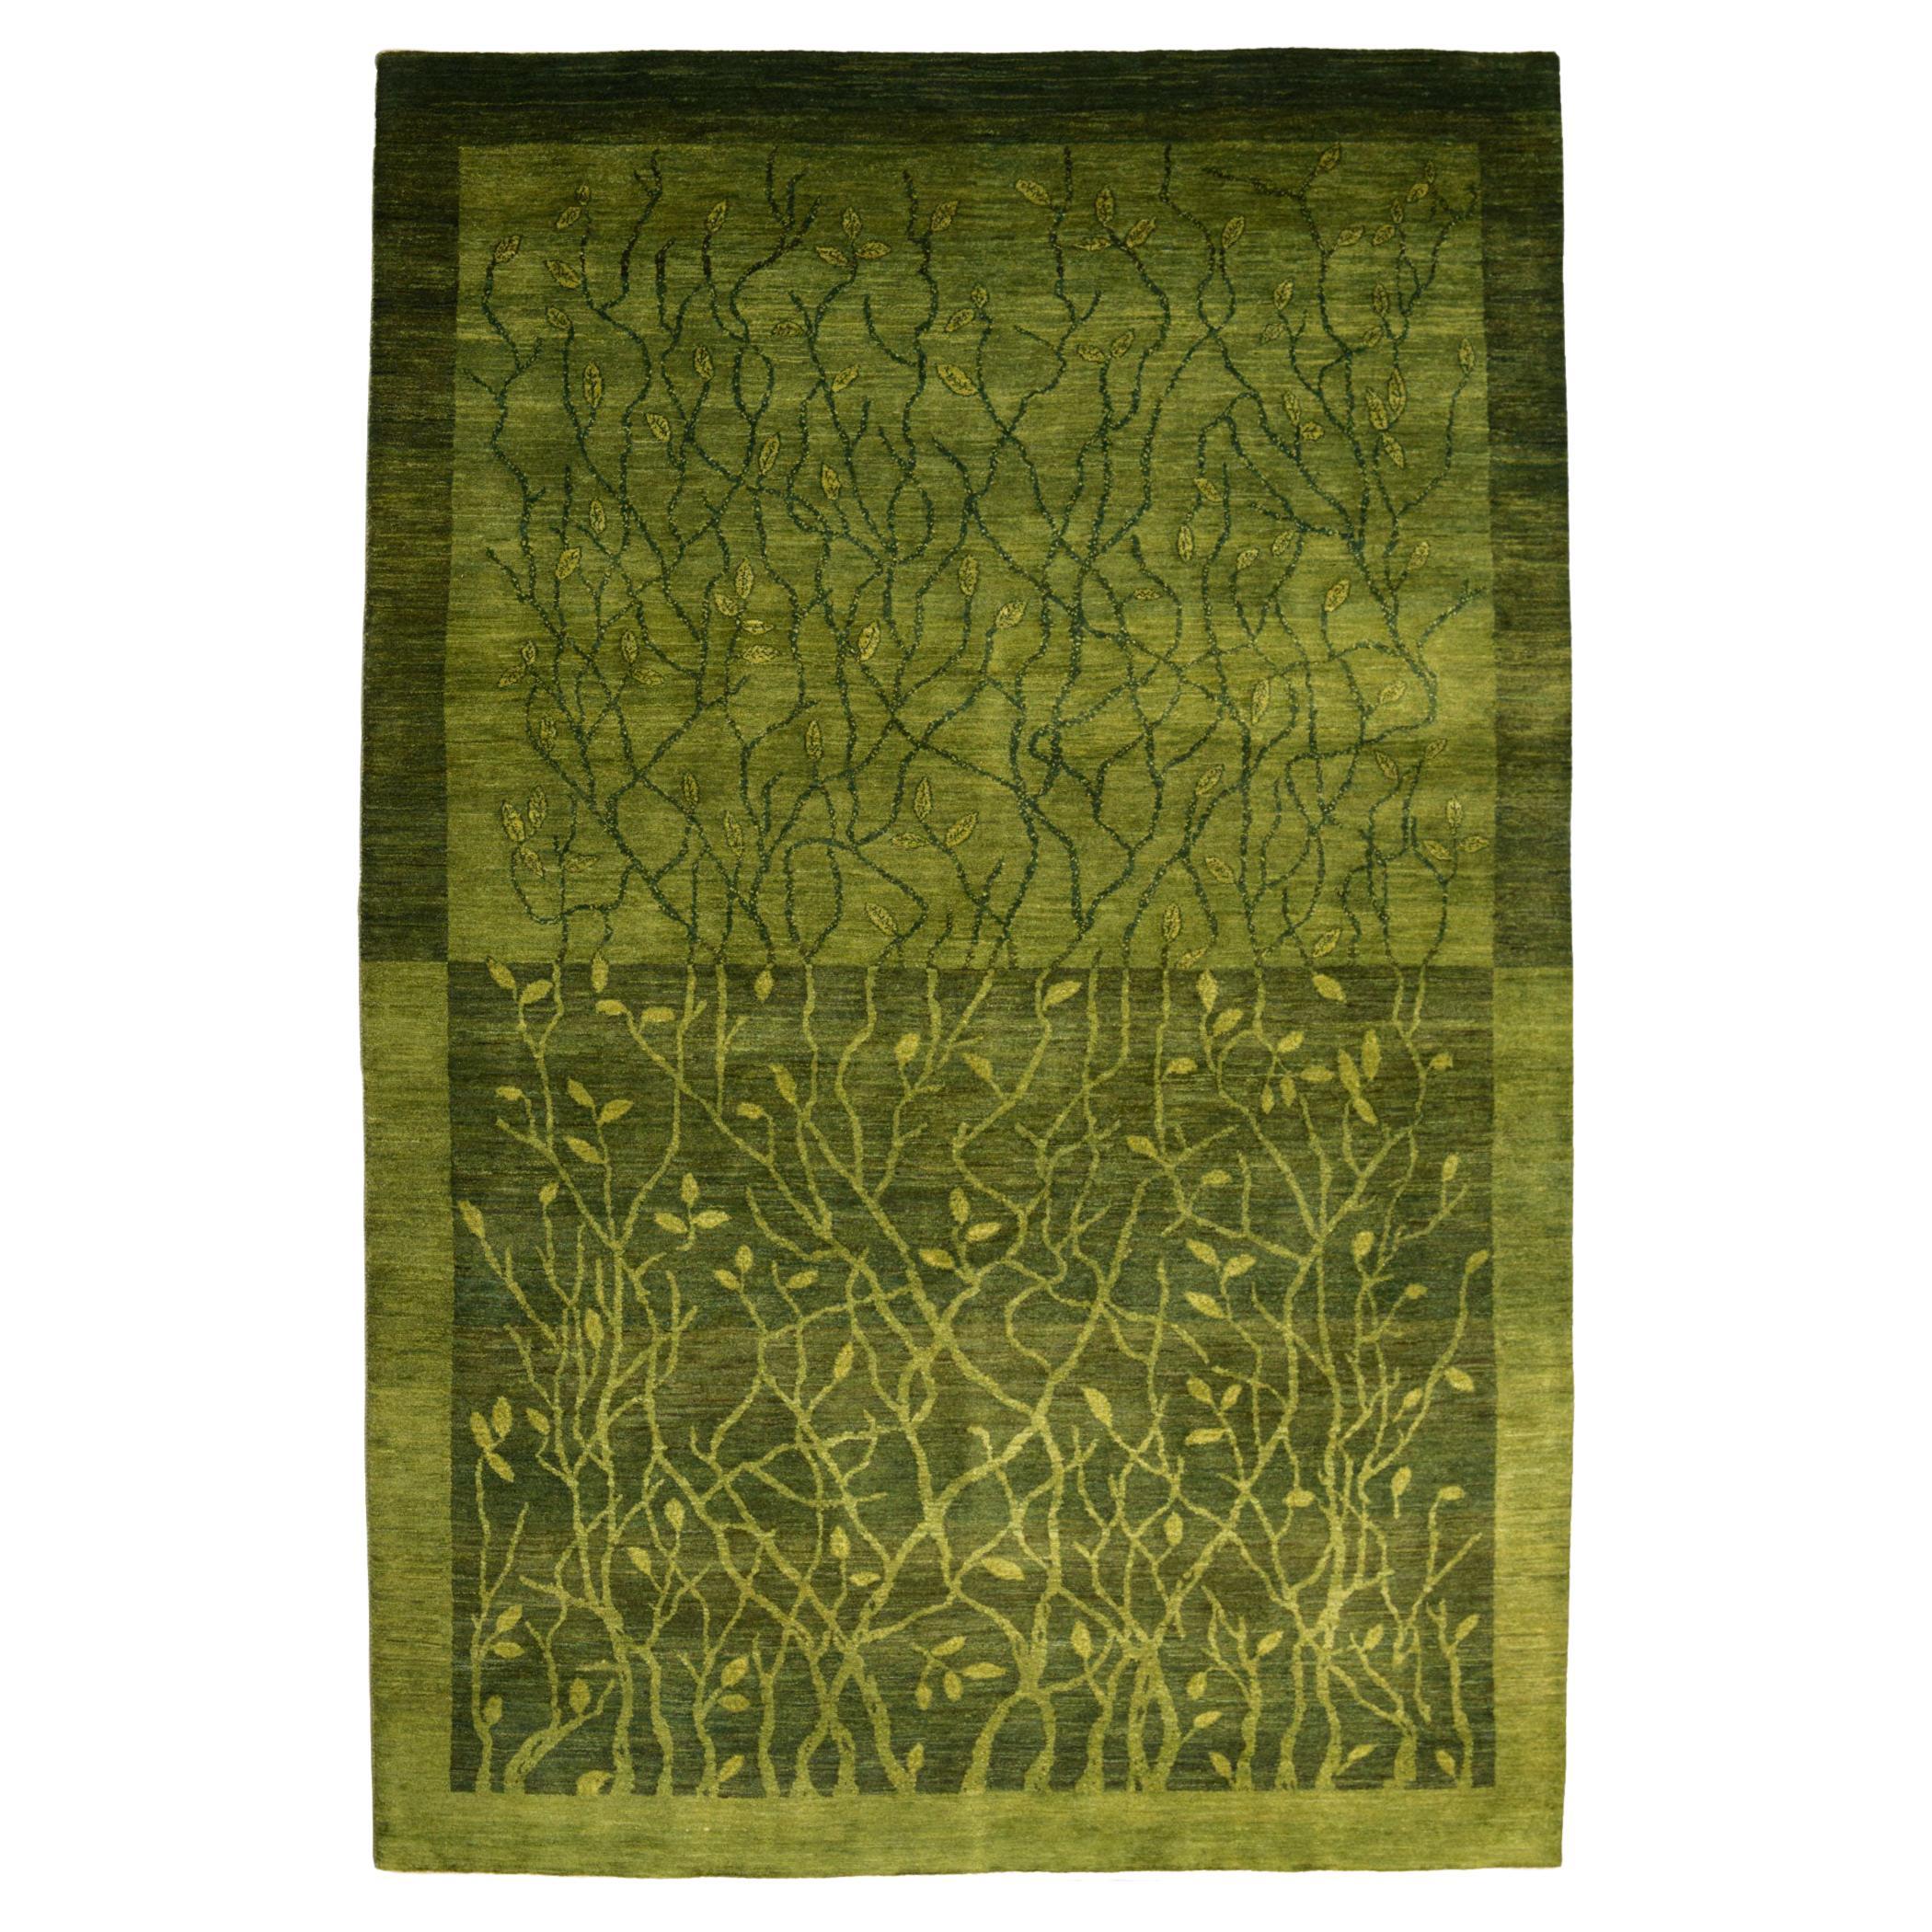 Orley Shabahang "Flora" Mid-Century Persian Kashkouli Rug, 6' x 9' For Sale